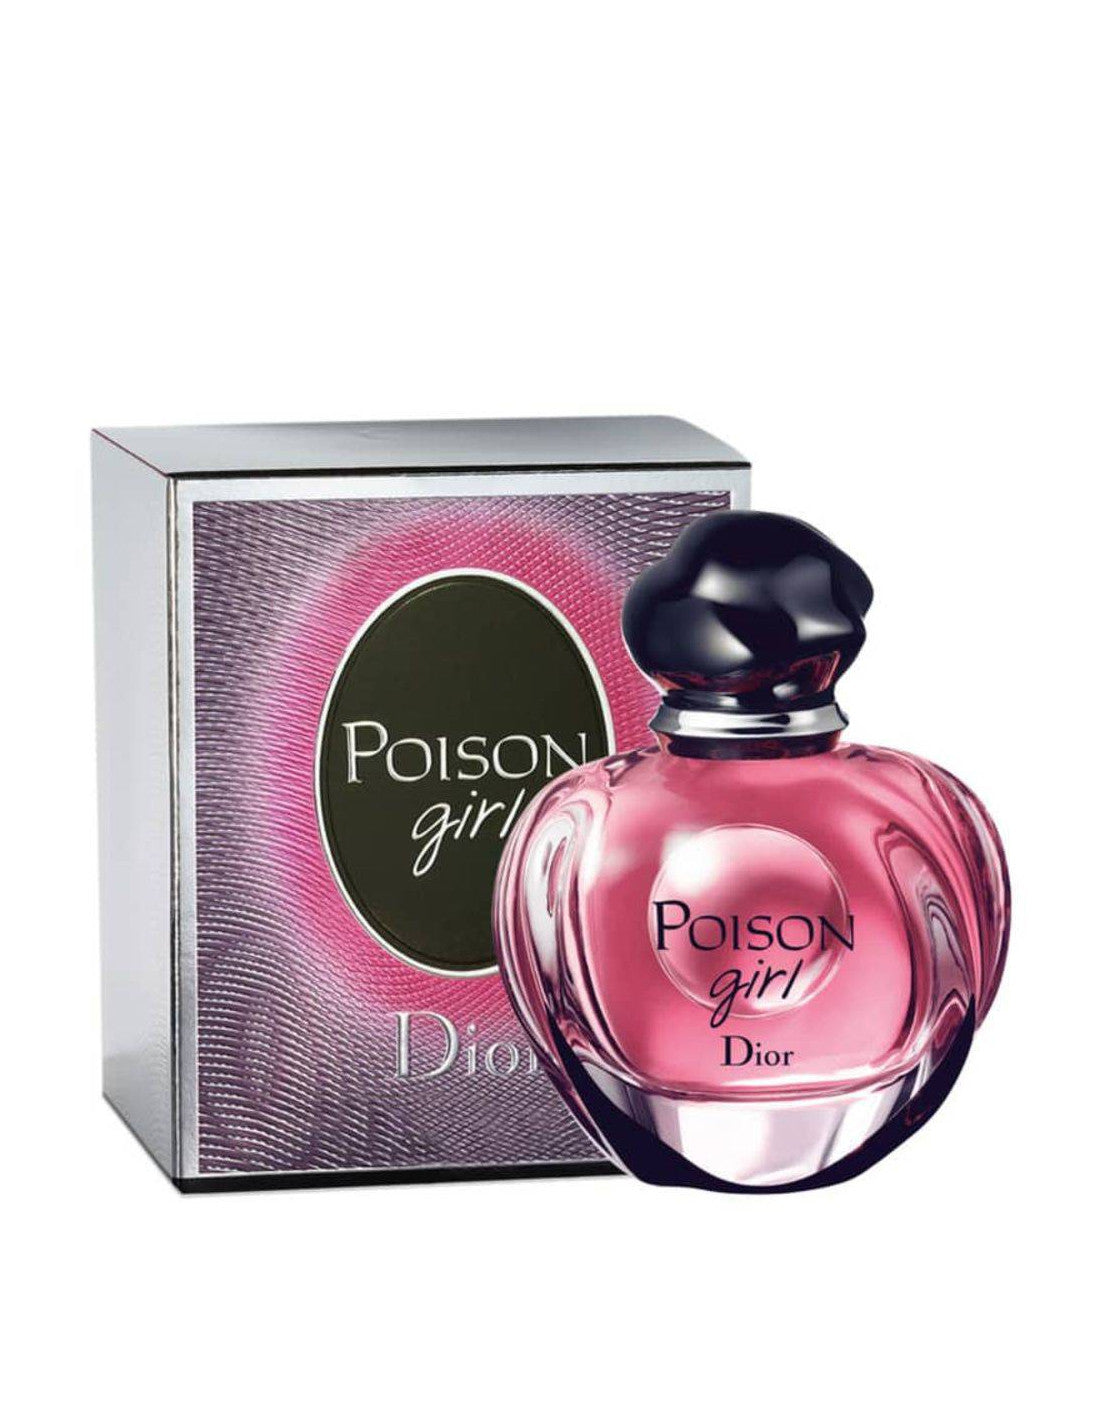 Poison girl dior perfume para mujer 100 ML